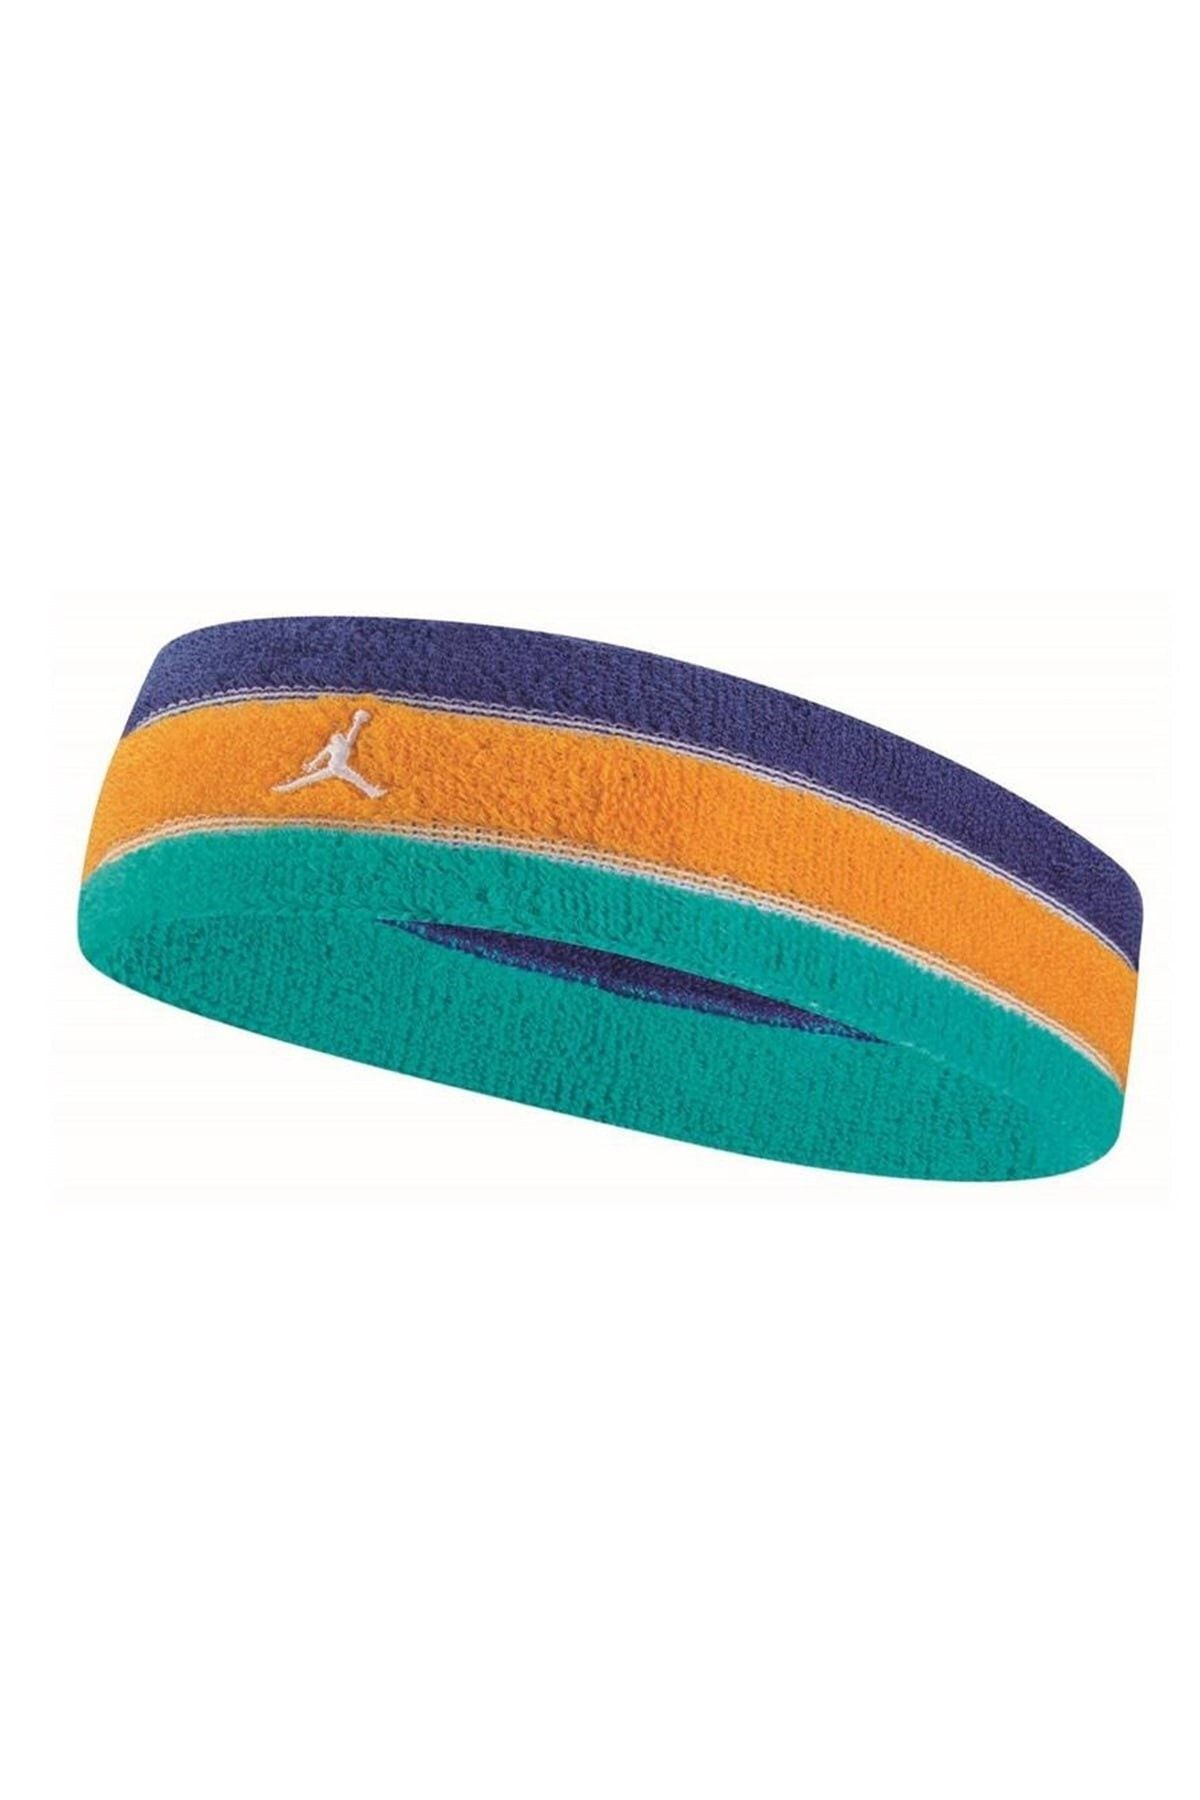 Nike Jordan M Headband Terry J.100.4299.465.os